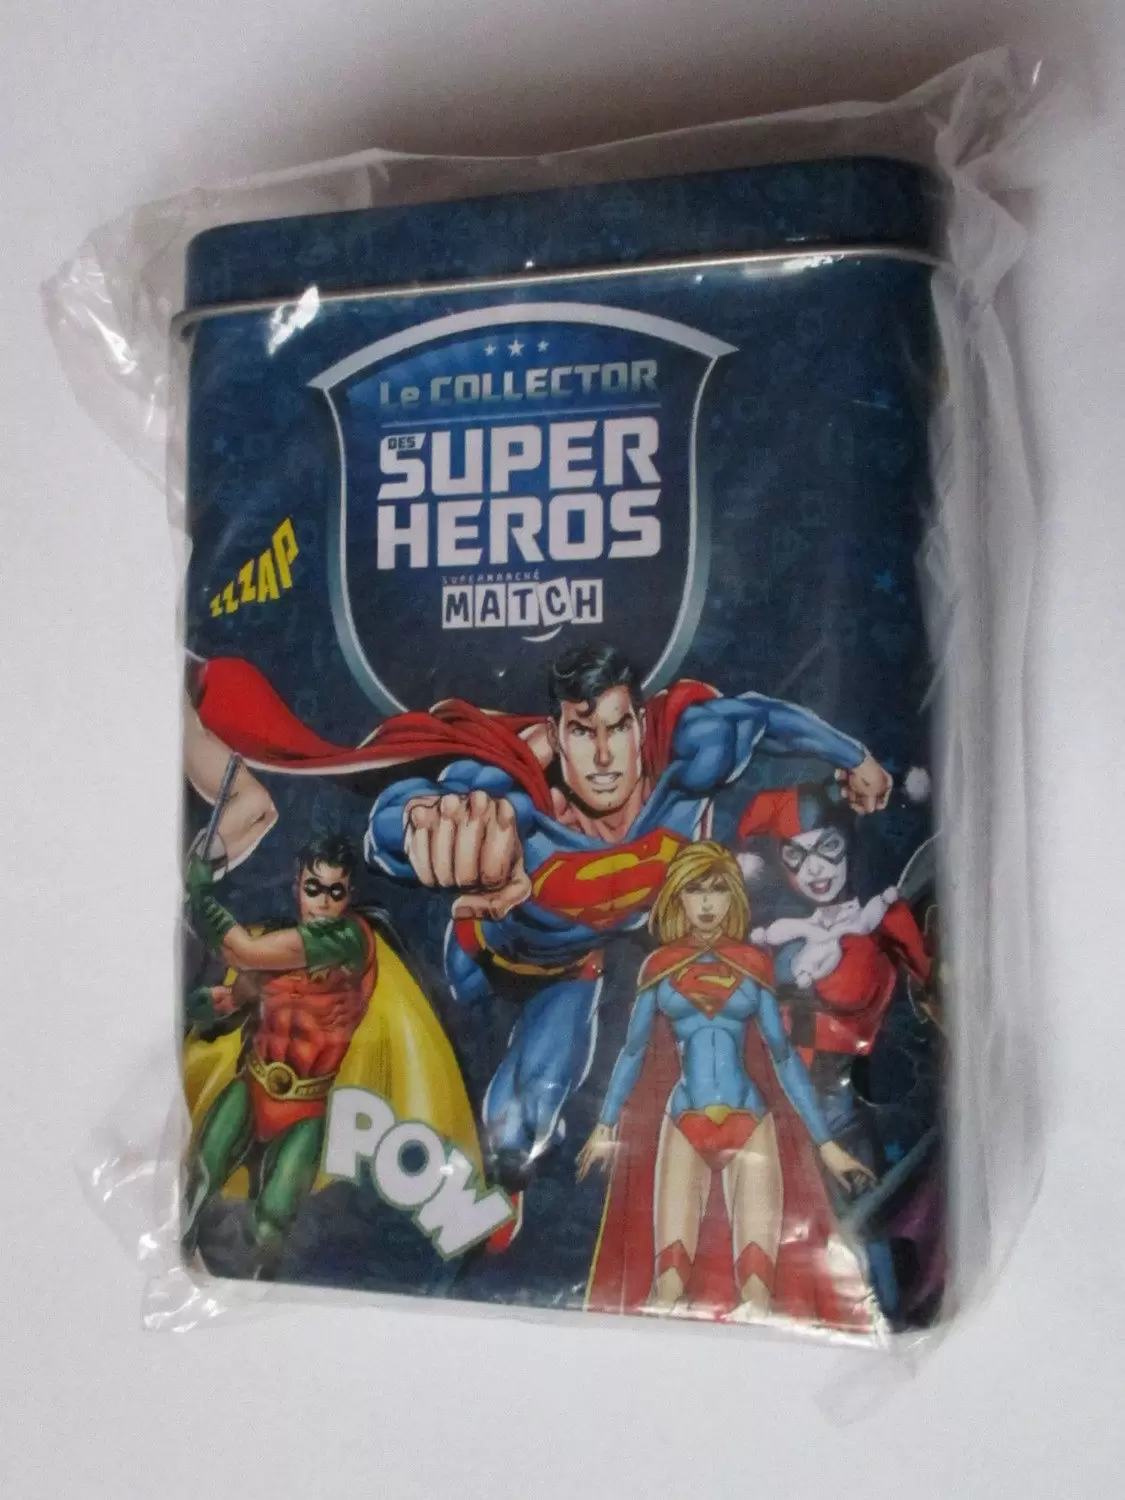 Le collector Super héros (Match) - Boîte Super Héros